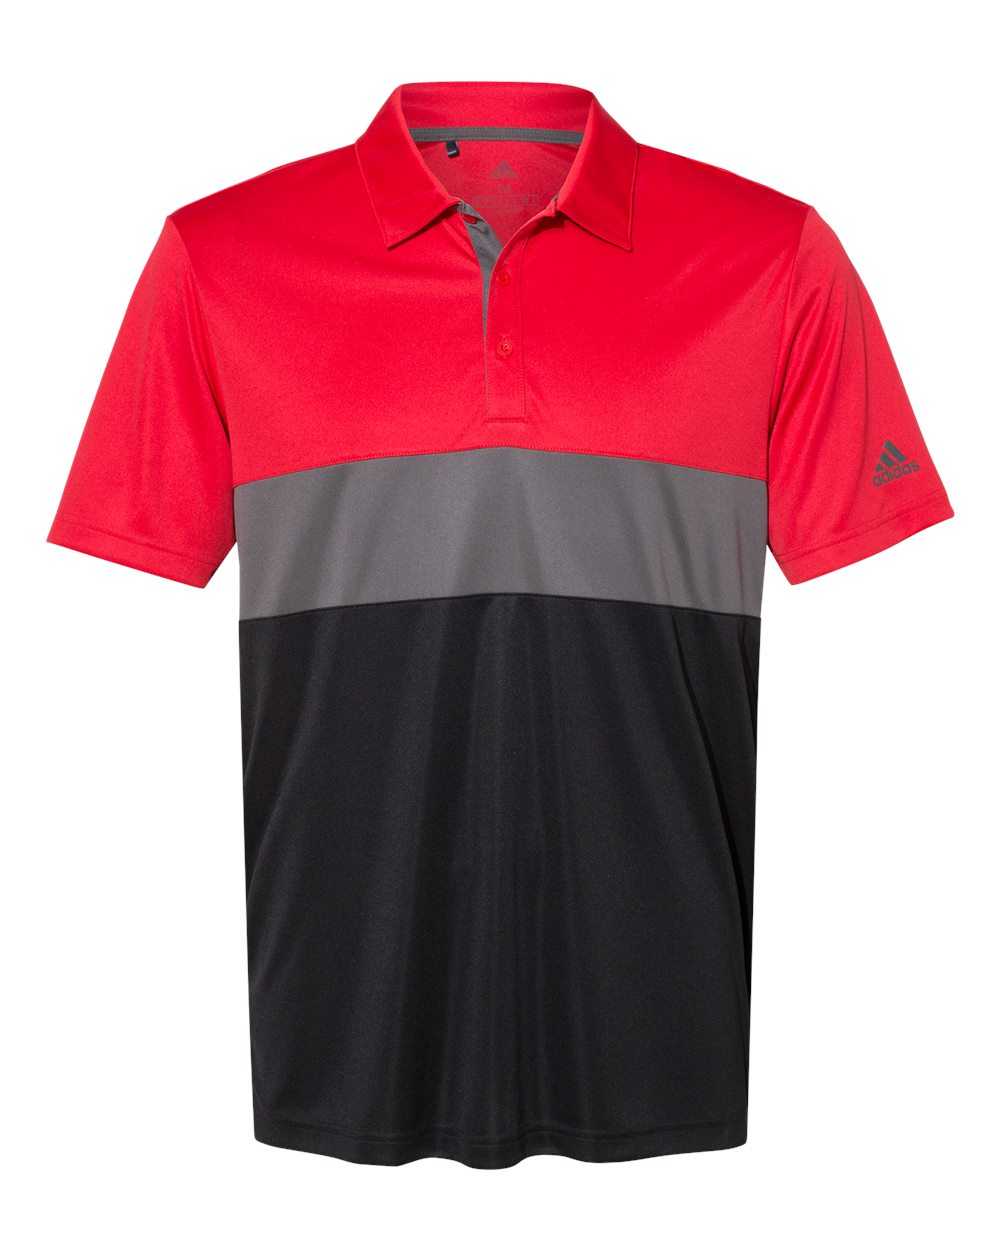 Adidas A236 Merch Block Sport Shirt - Collegiate Red Grey Five Black - HIT a Double